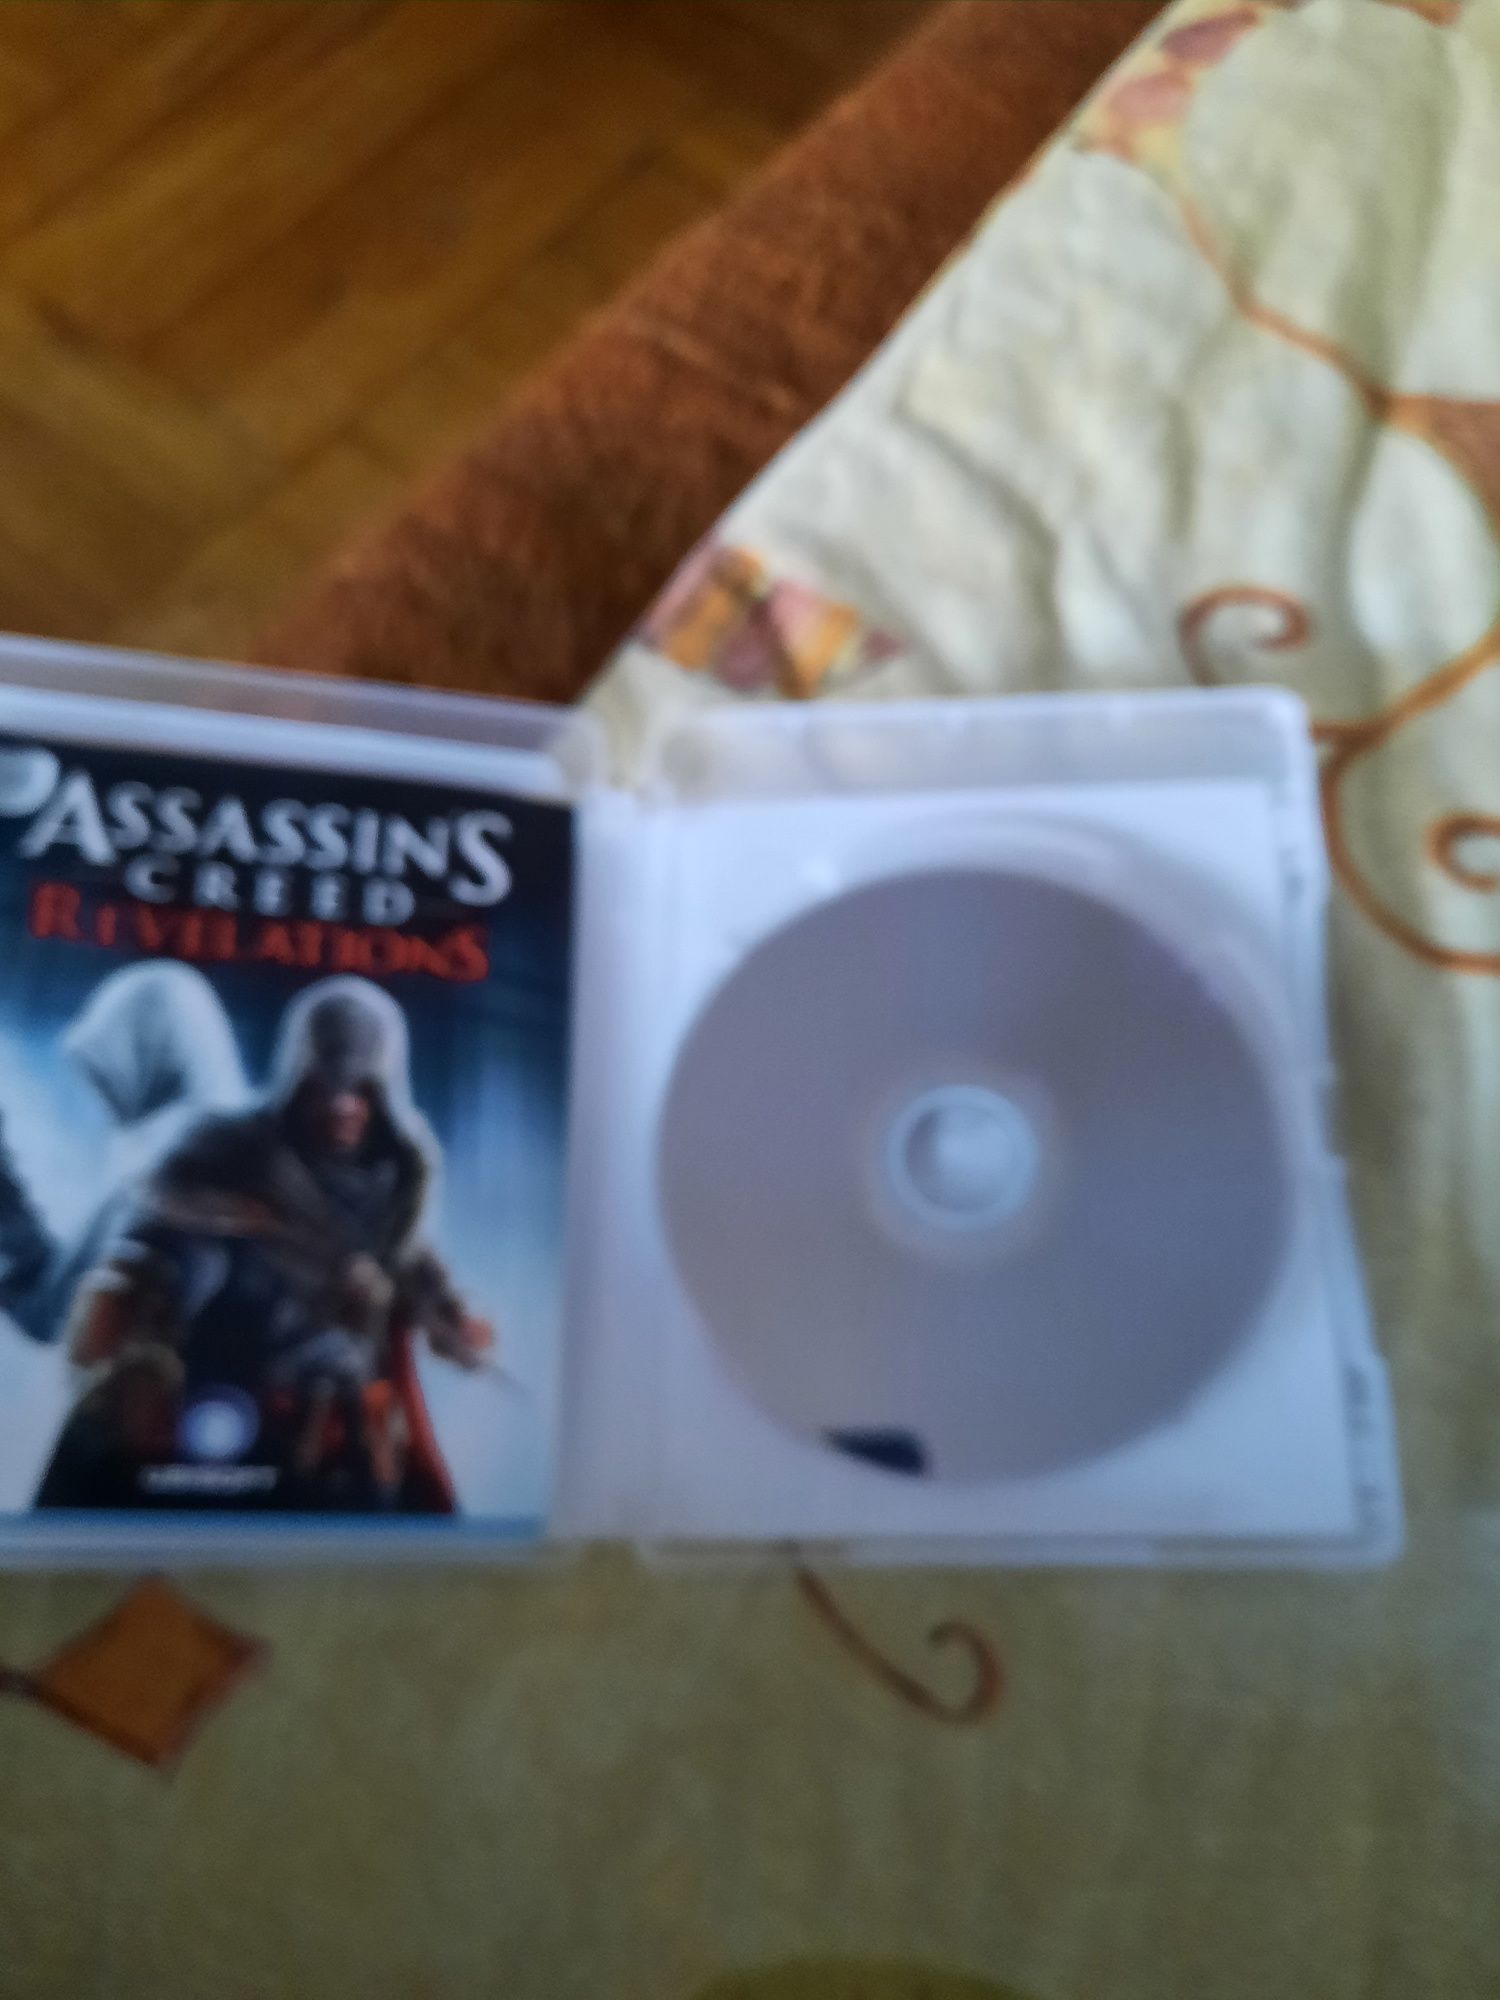 Assassins creed rewelations ps3